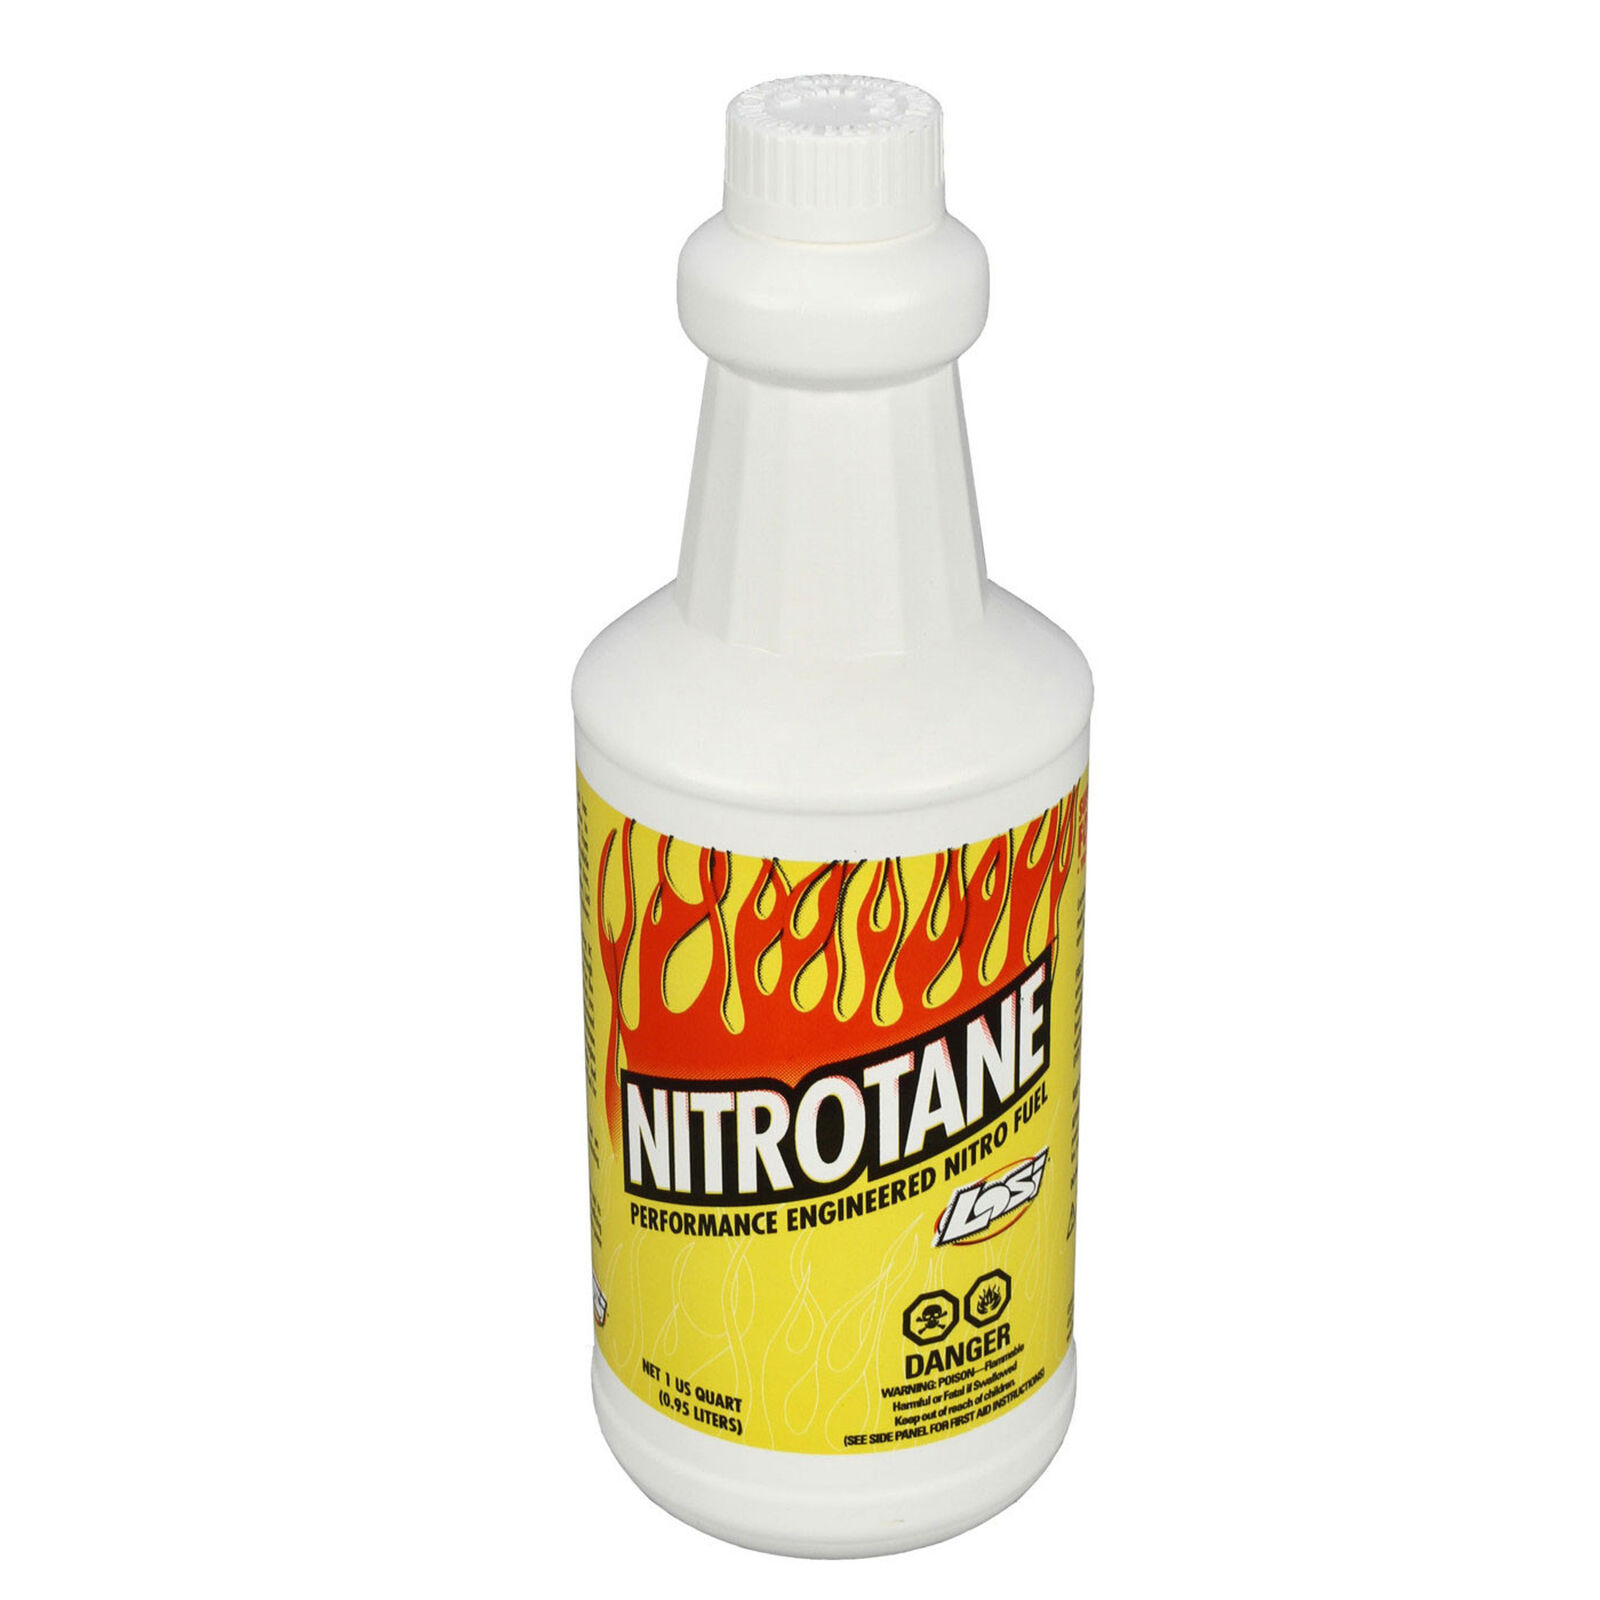 Nitrotane Race Fuel 20%, Quart